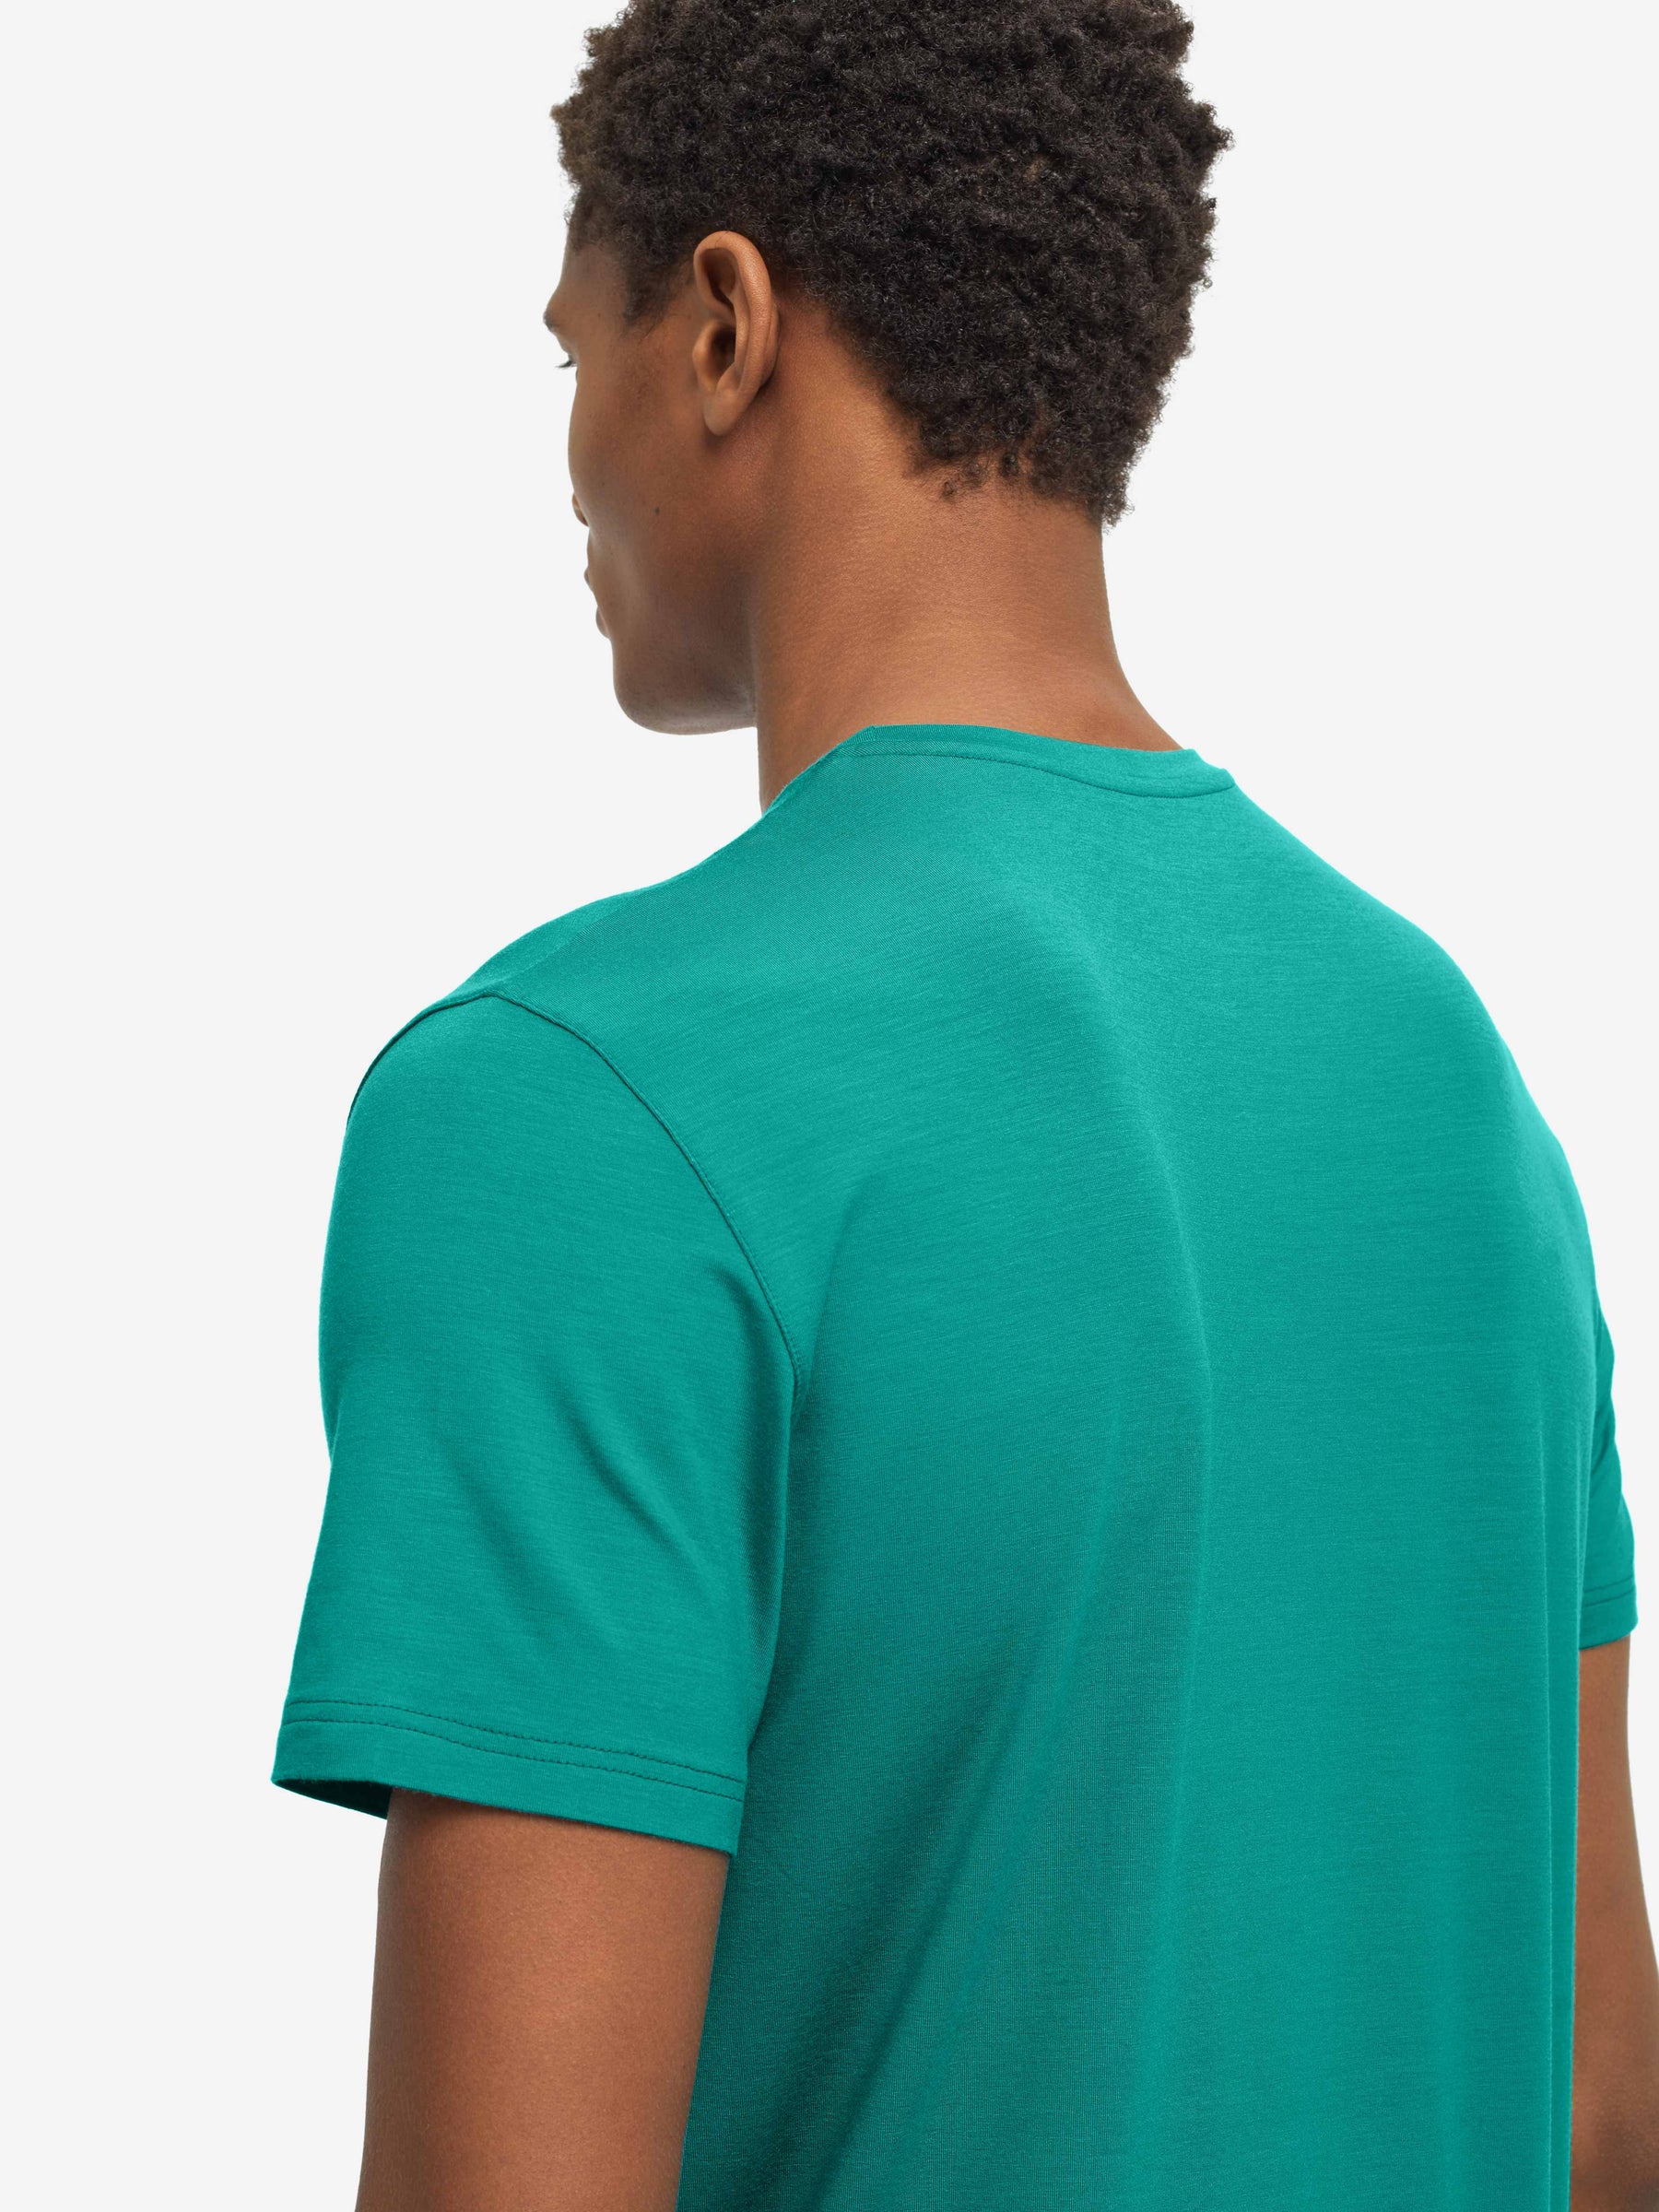 Men's T-Shirt Basel Micro Modal Stretch Jungle Green